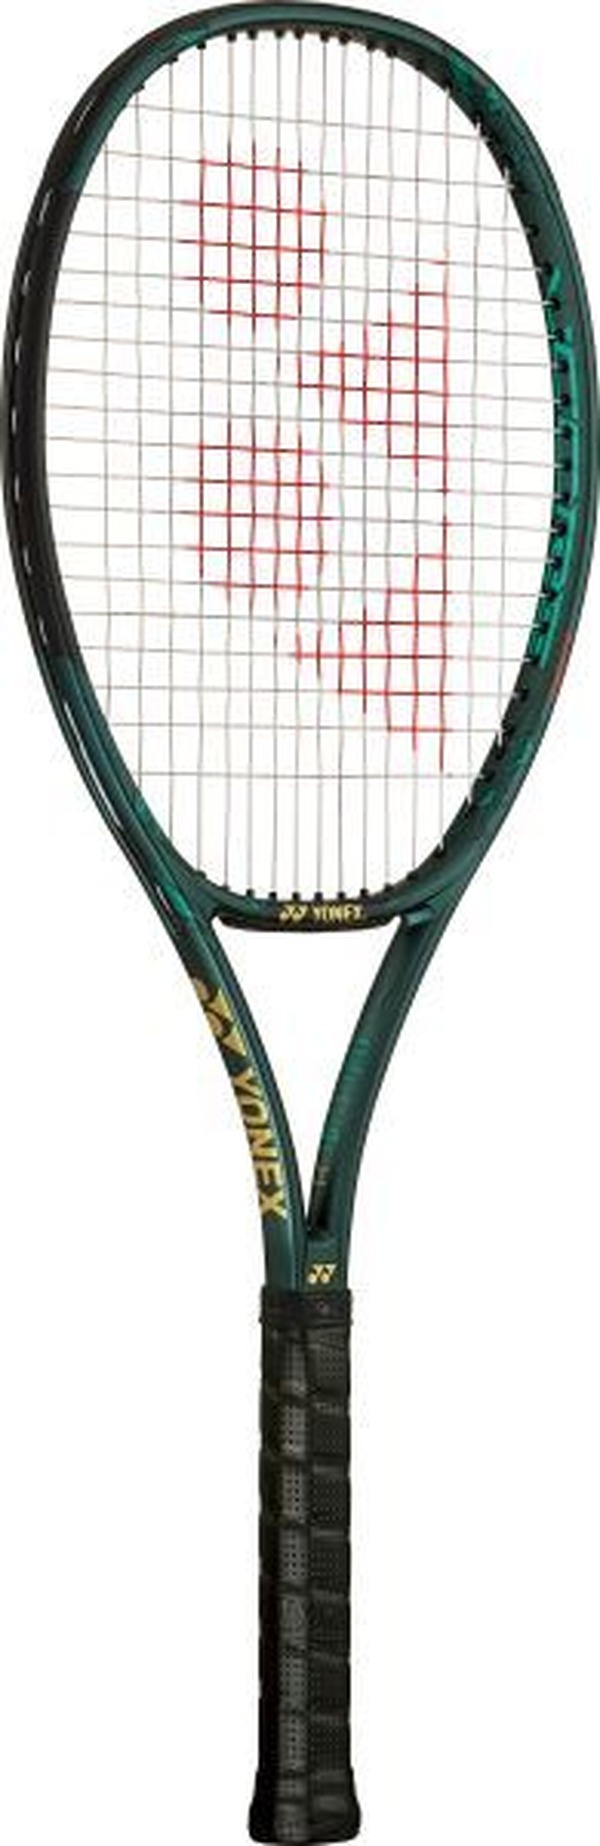 YONEX VCORR TOUR GRAVITYテニスラケット 2本セット - テニス